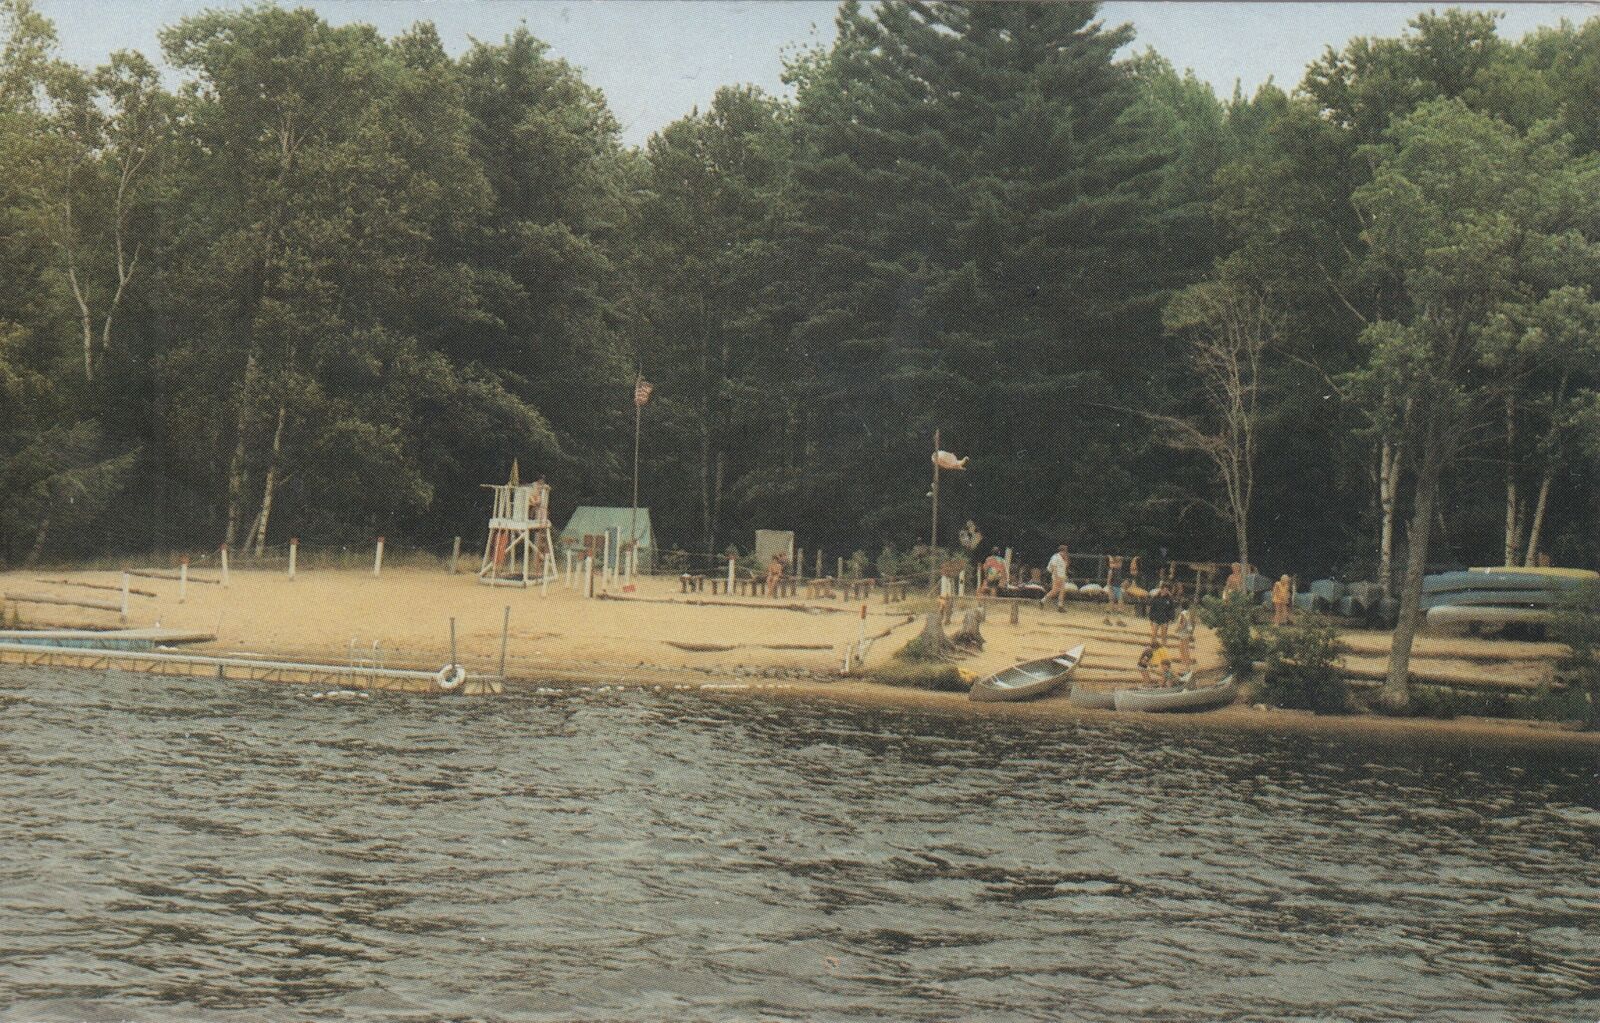 NW Kalkaska Grayling MI c.1960s JUST ARRIVED CAMP TA-PI-CO Boy Scout Summer Camp